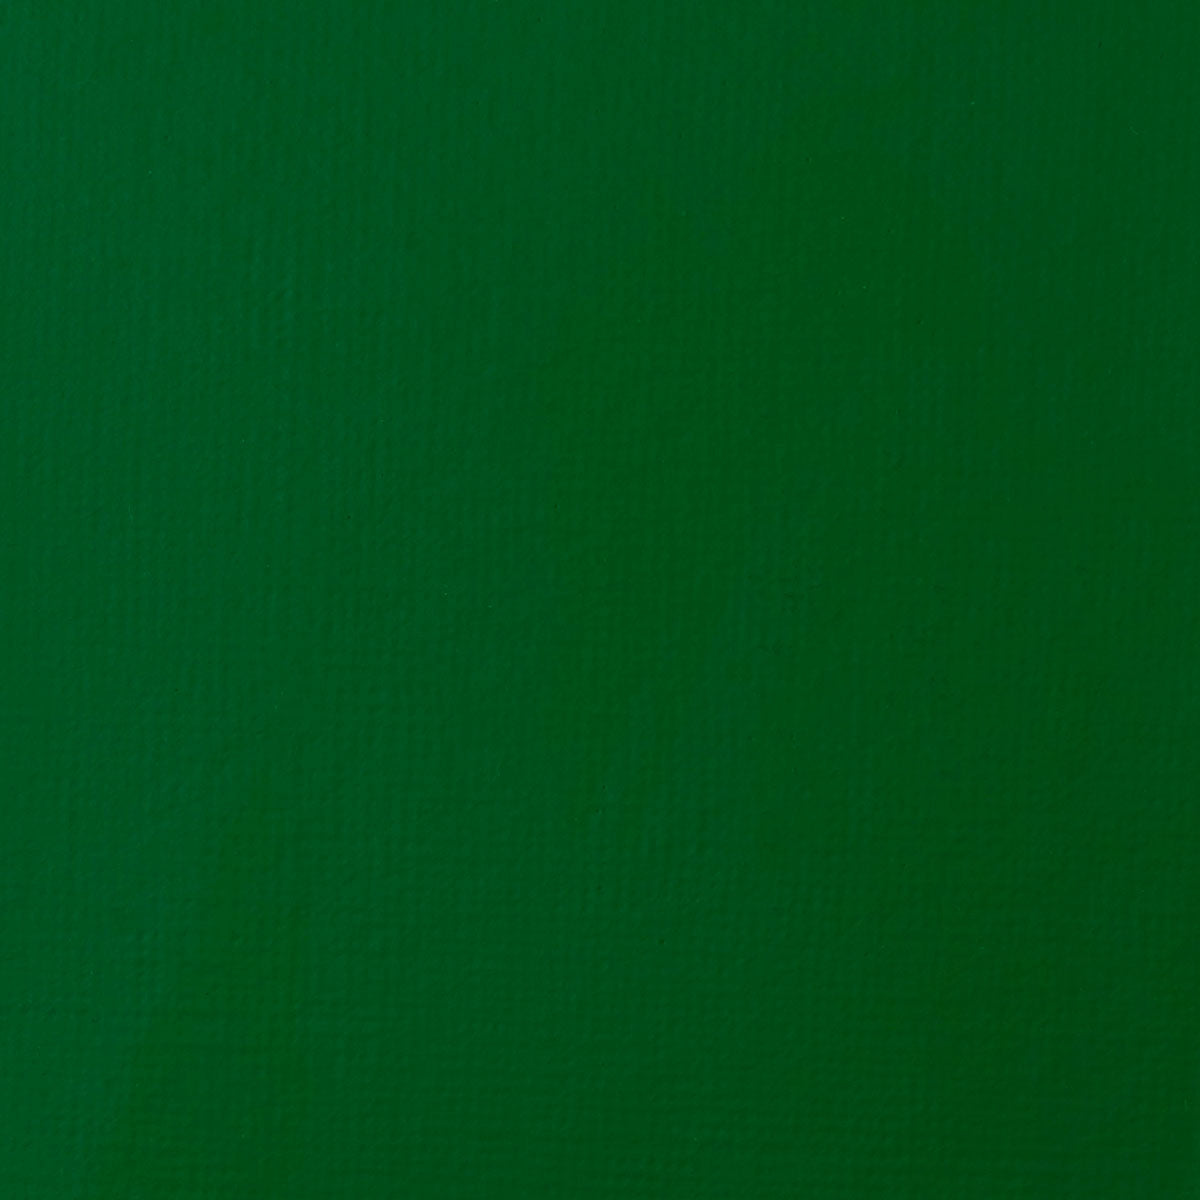 Liquitex - Acrylic Gouache 59ml S2 - Emerald Green